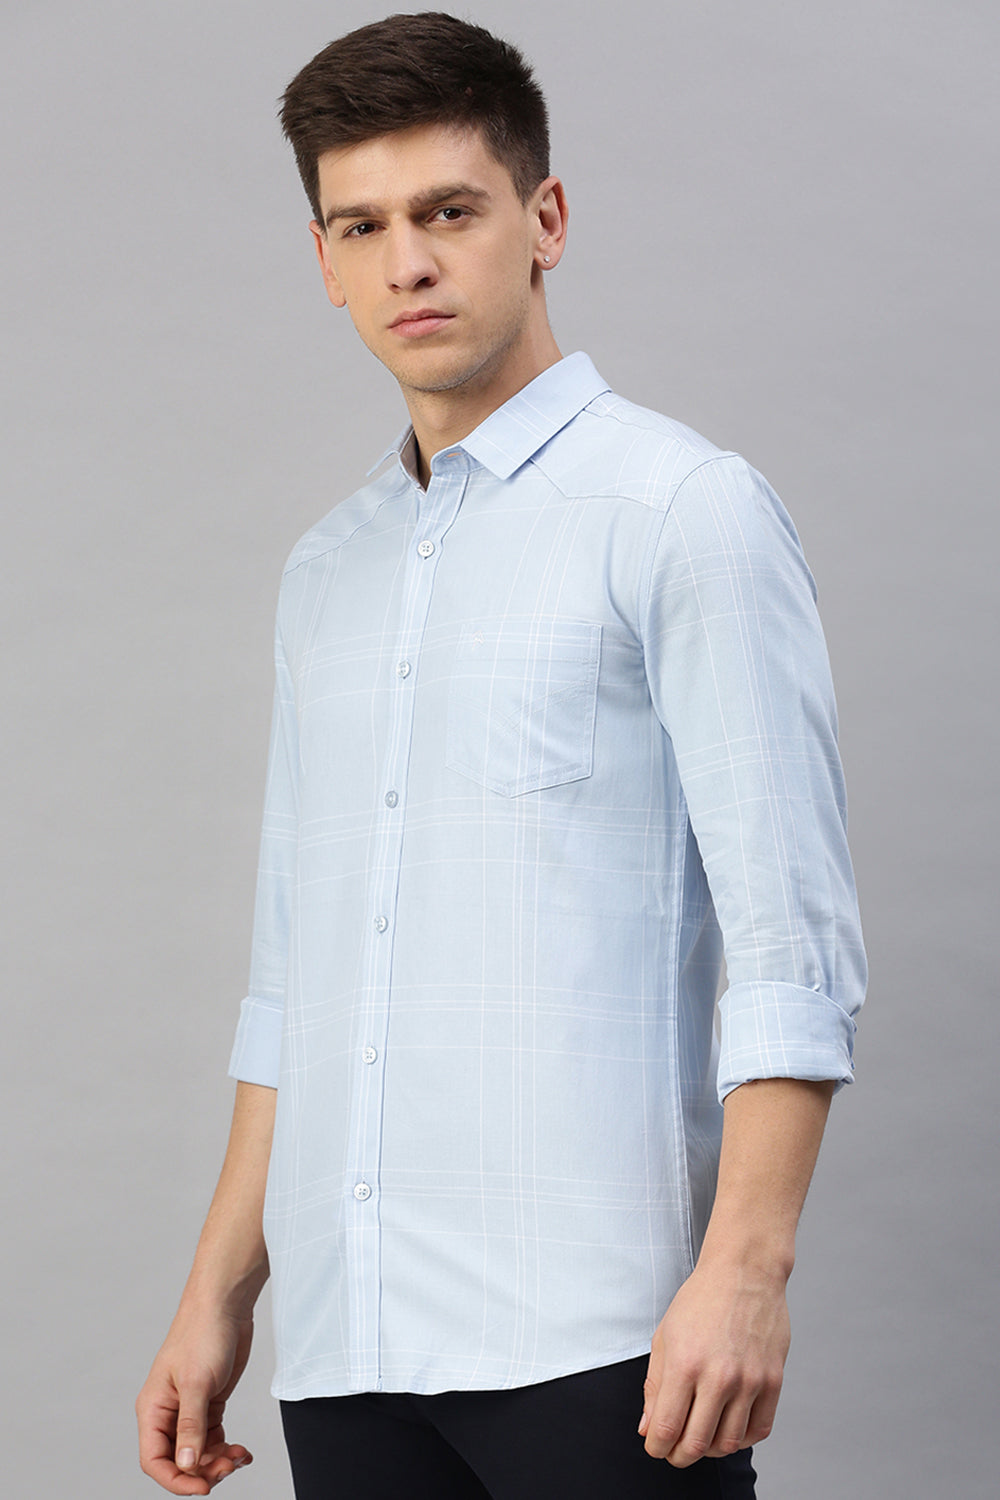 CP BRO Men's Cotton Full Sleeve Checked Slim Fit Polo Neck Light Blue Color Woven Shirt | Sbo1-43 A